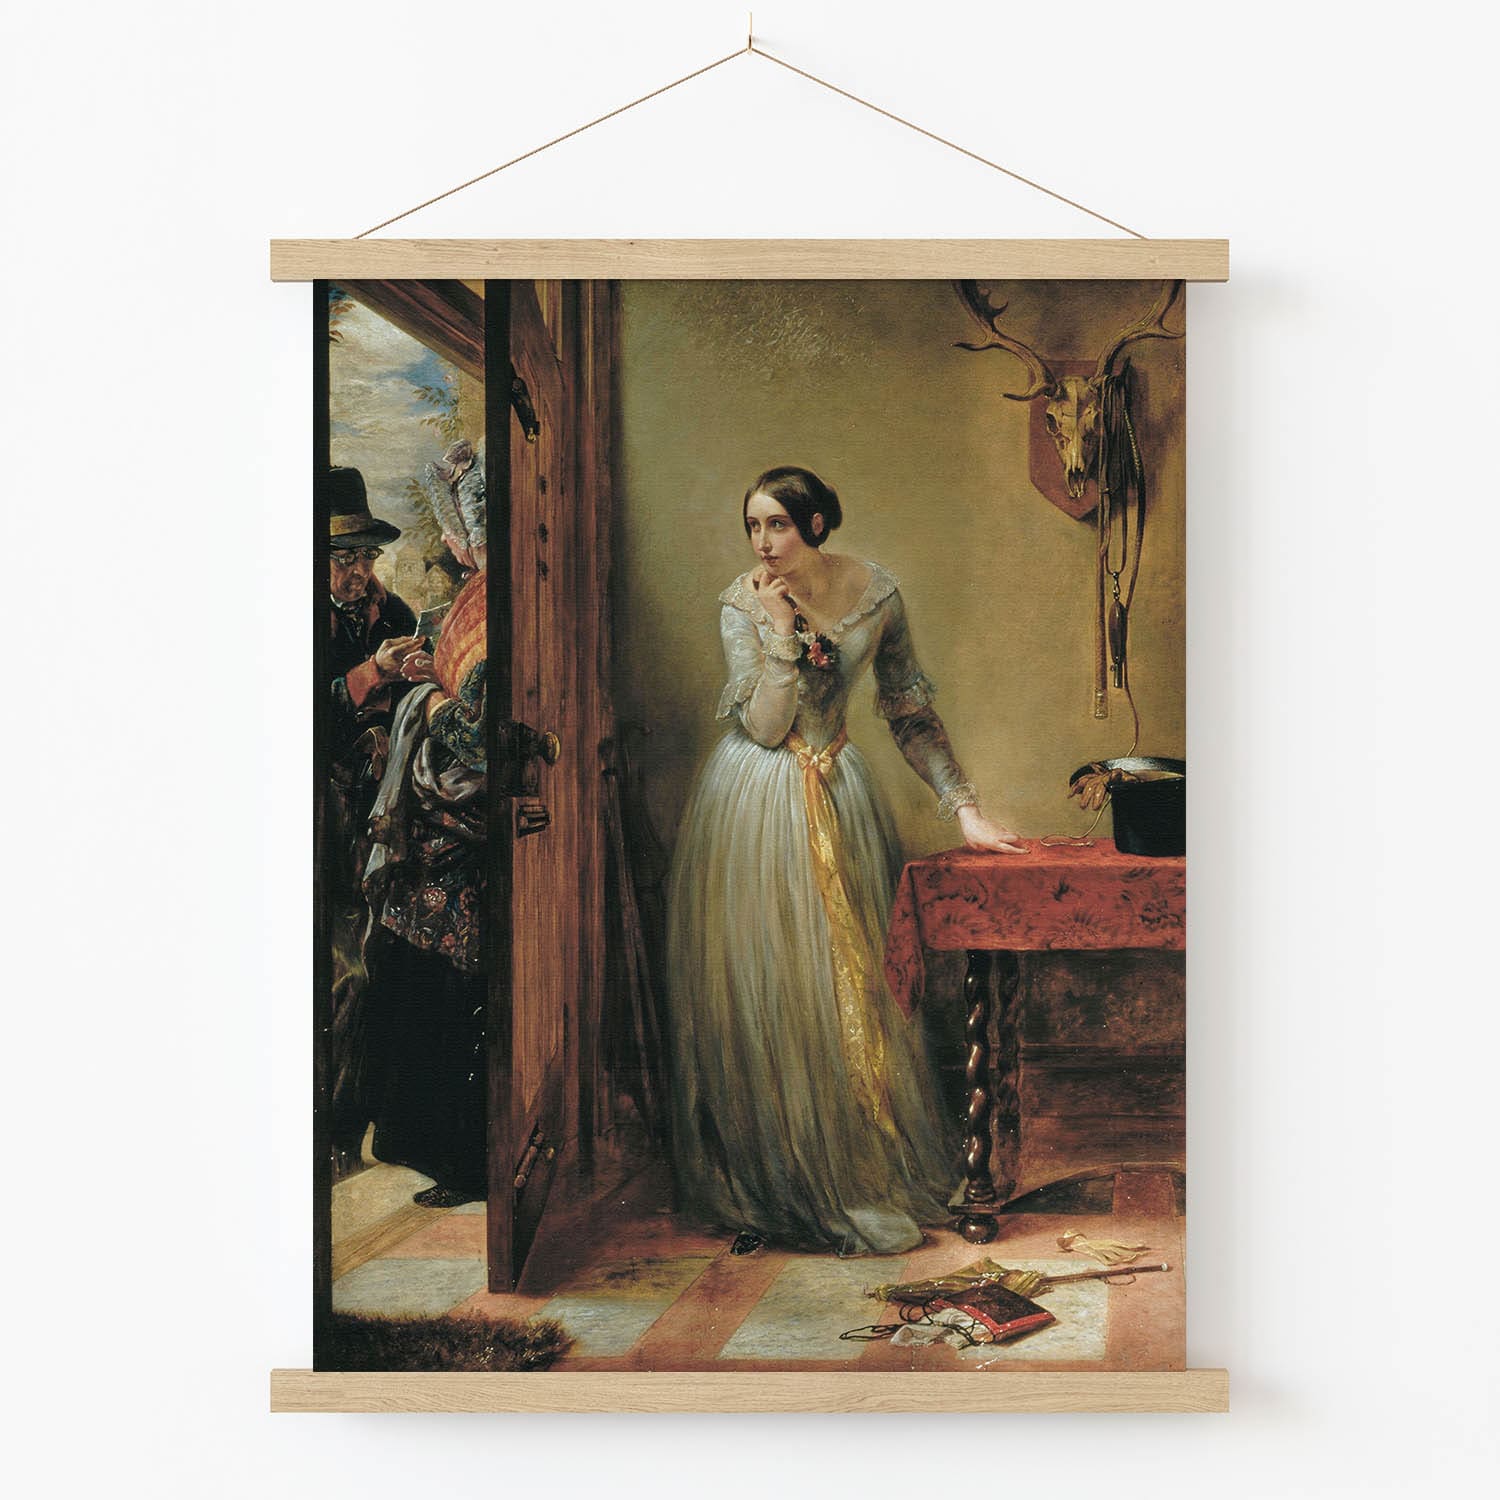 Victorian Era Mystery Art Print in Wood Hanger Frame on Wall